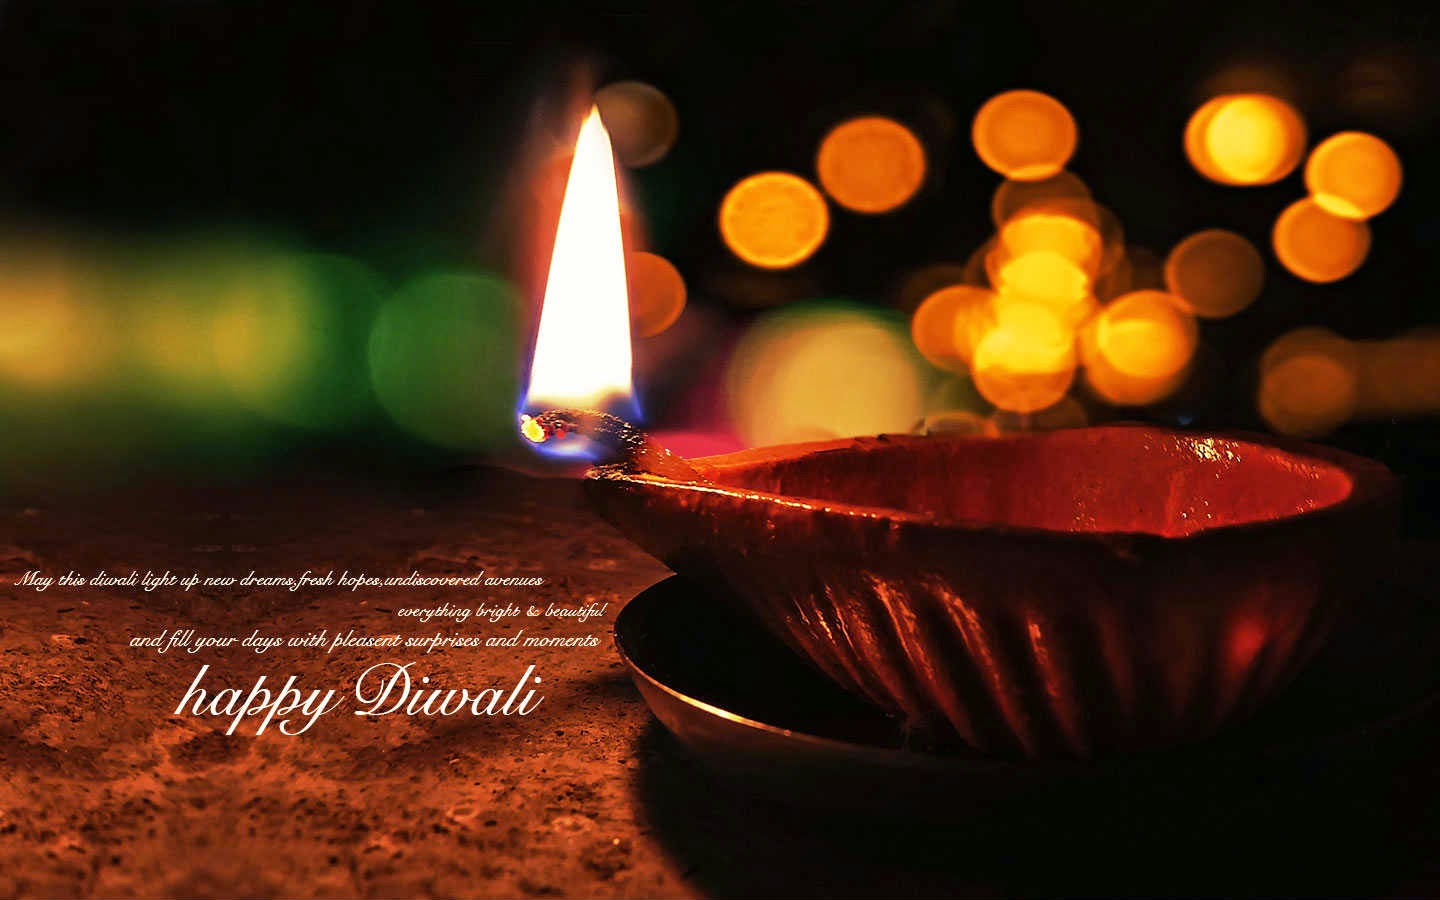 happy diwali wallpaper hd widescreen,lighting,diwali,light,still life photography,candle